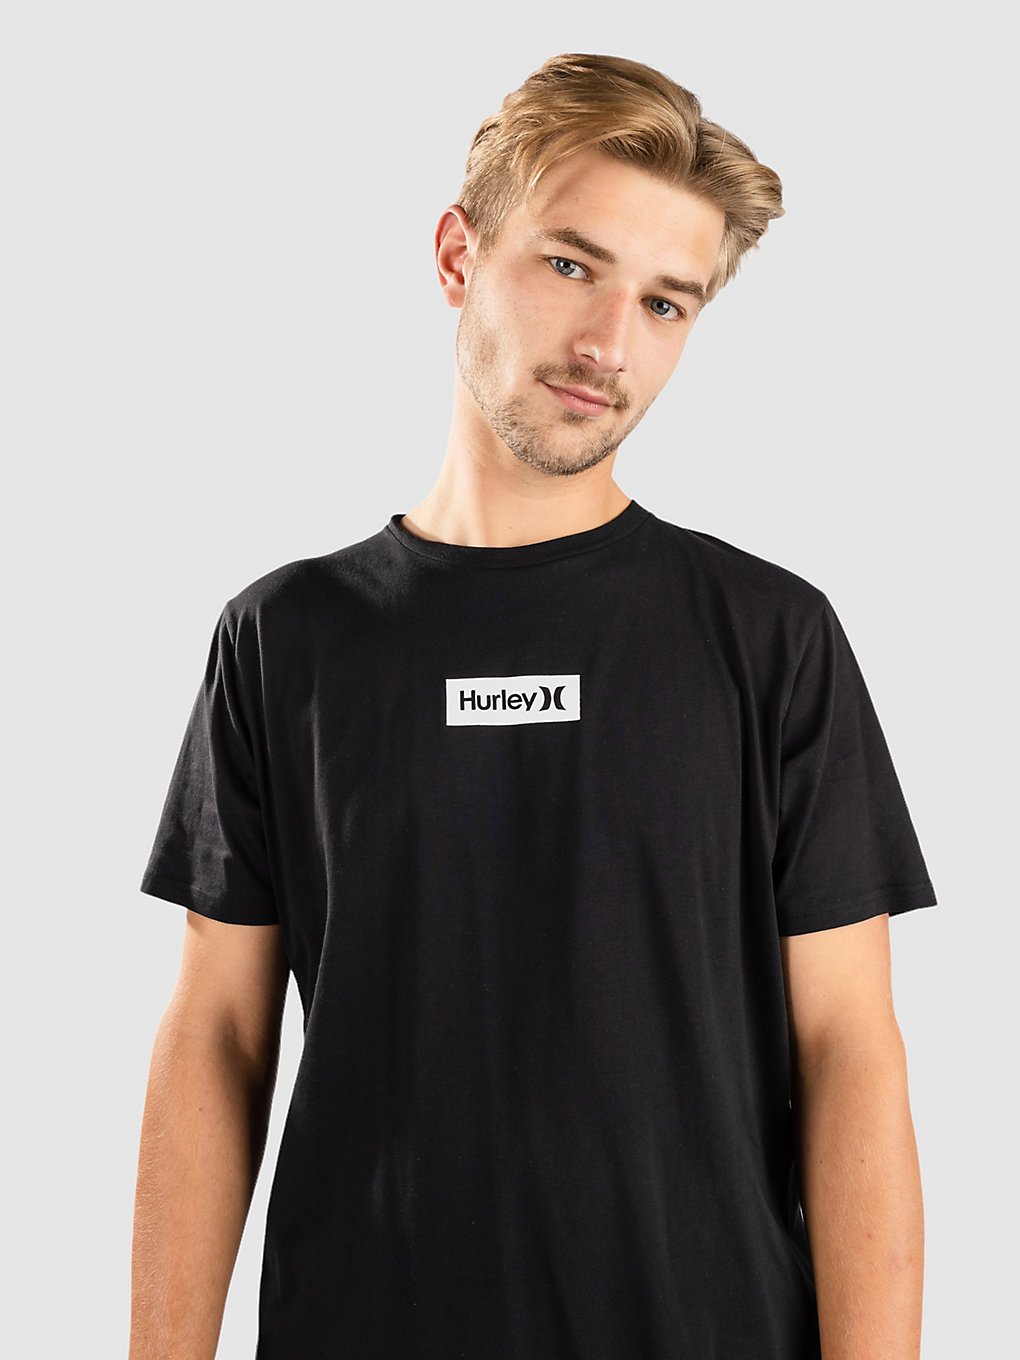 Hurley Explore Small Box T-Shirt black kaufen